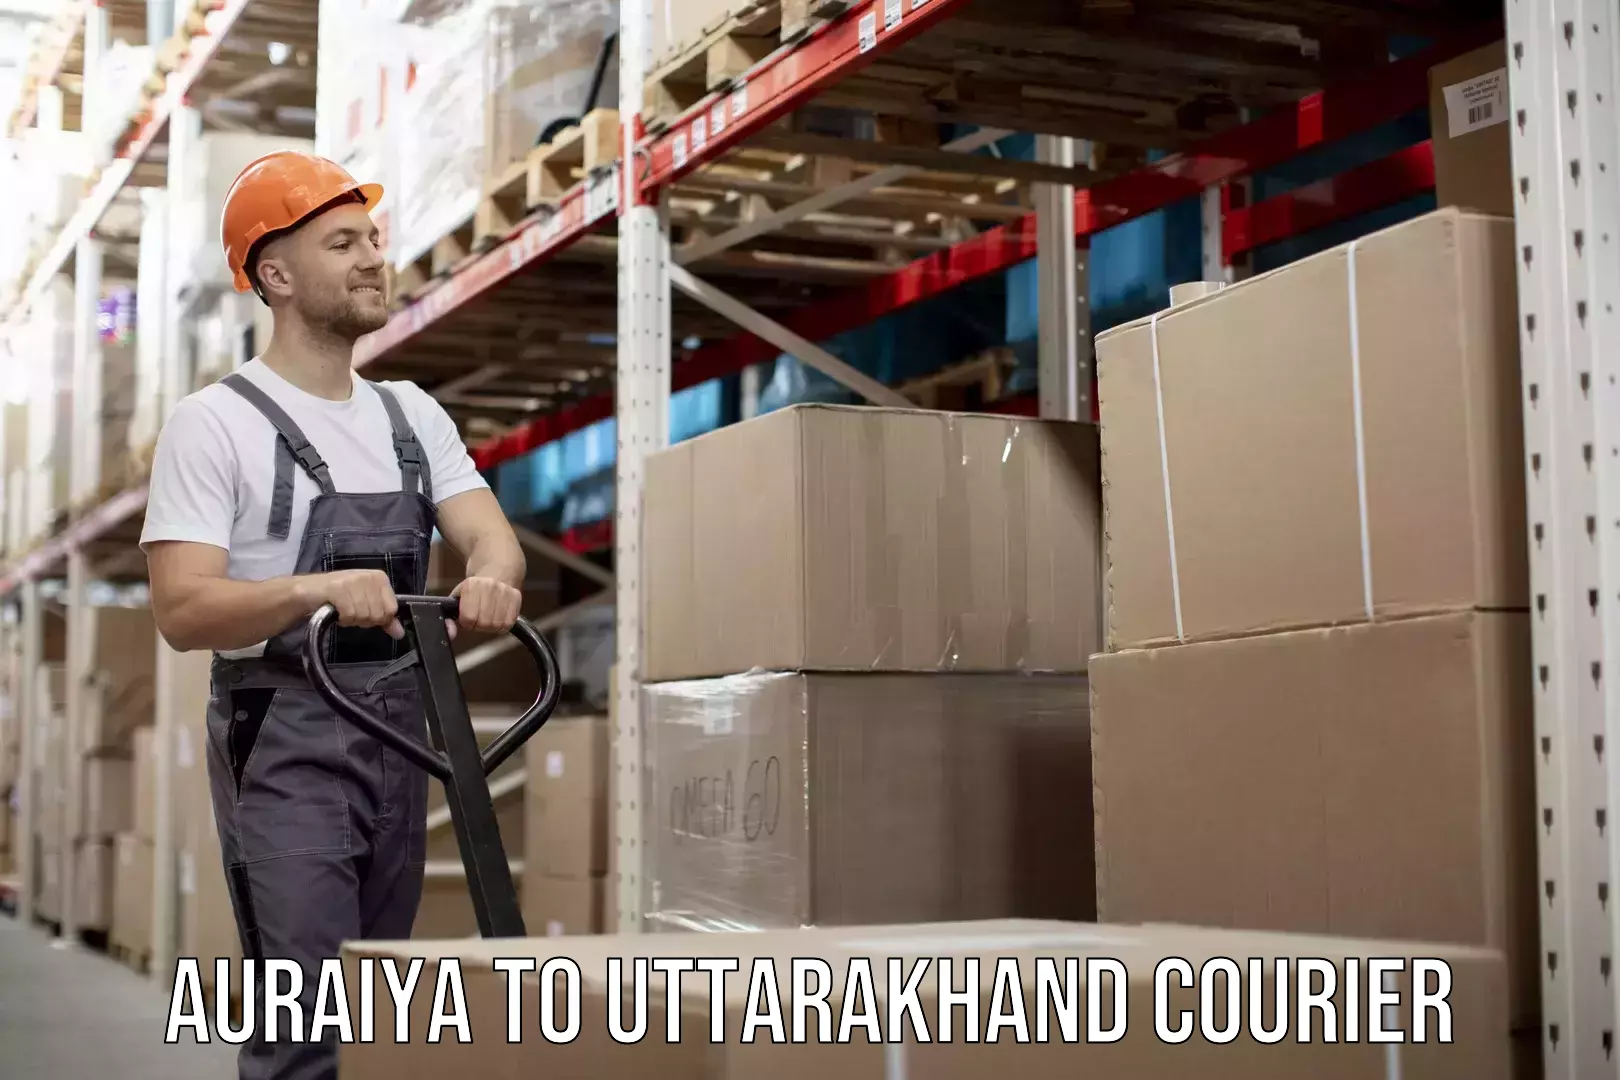 Doorstep delivery service Auraiya to Uttarakhand